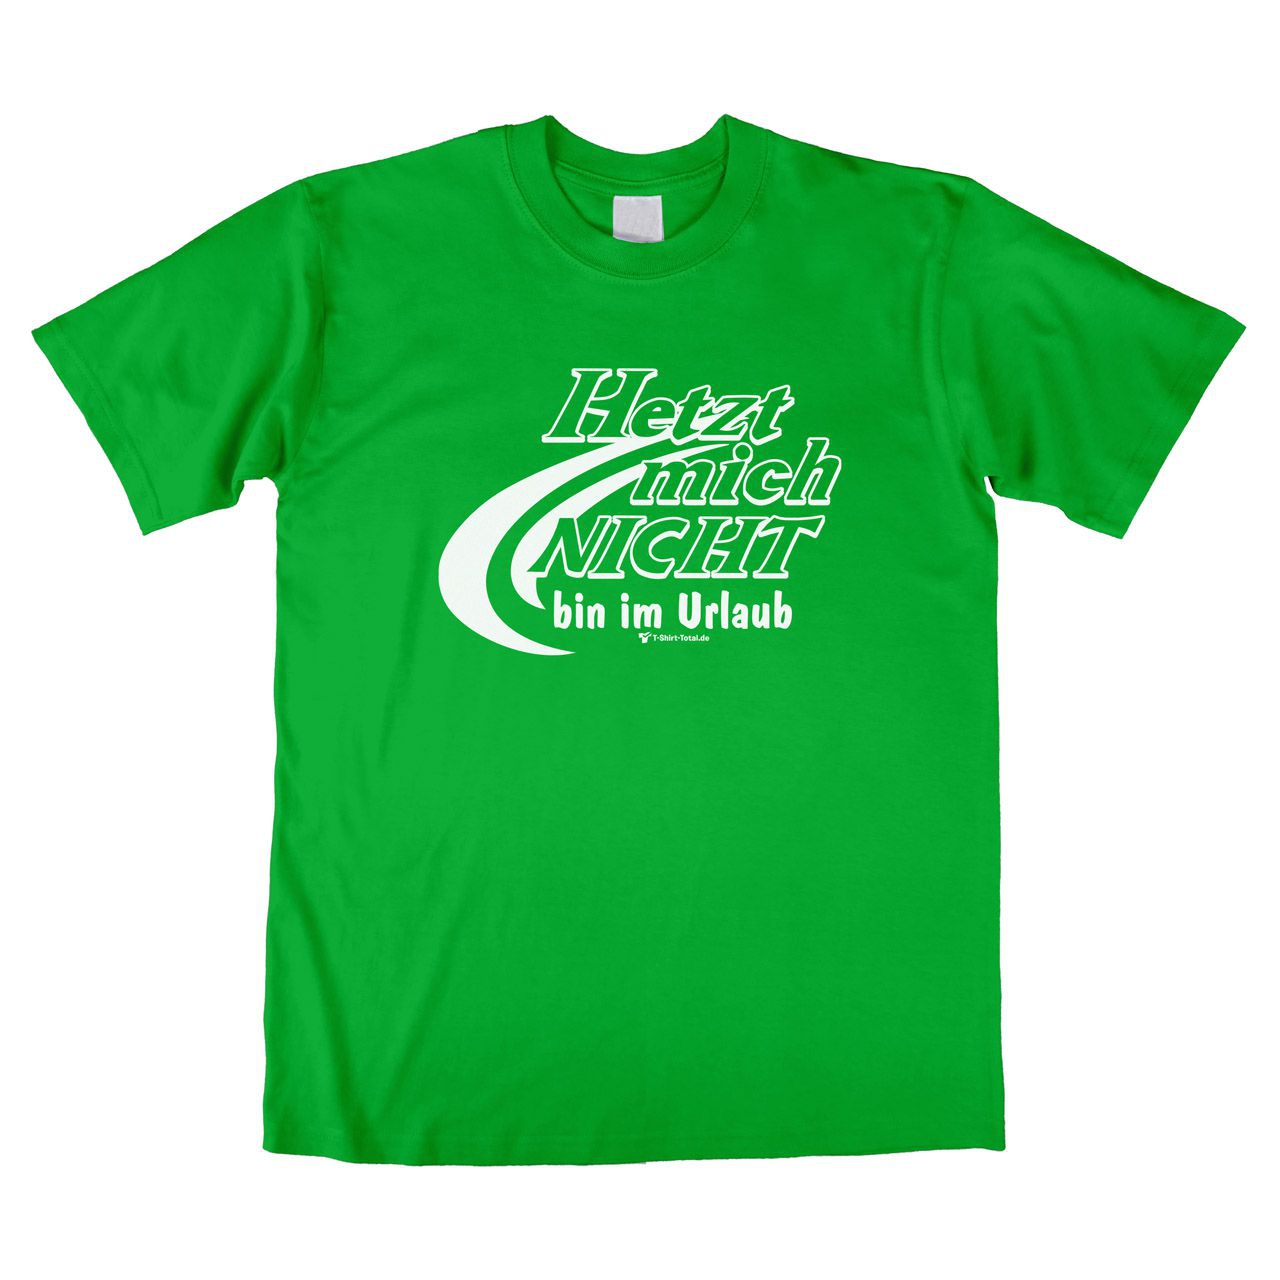 Bin im Urlaub Unisex T-Shirt grün Large